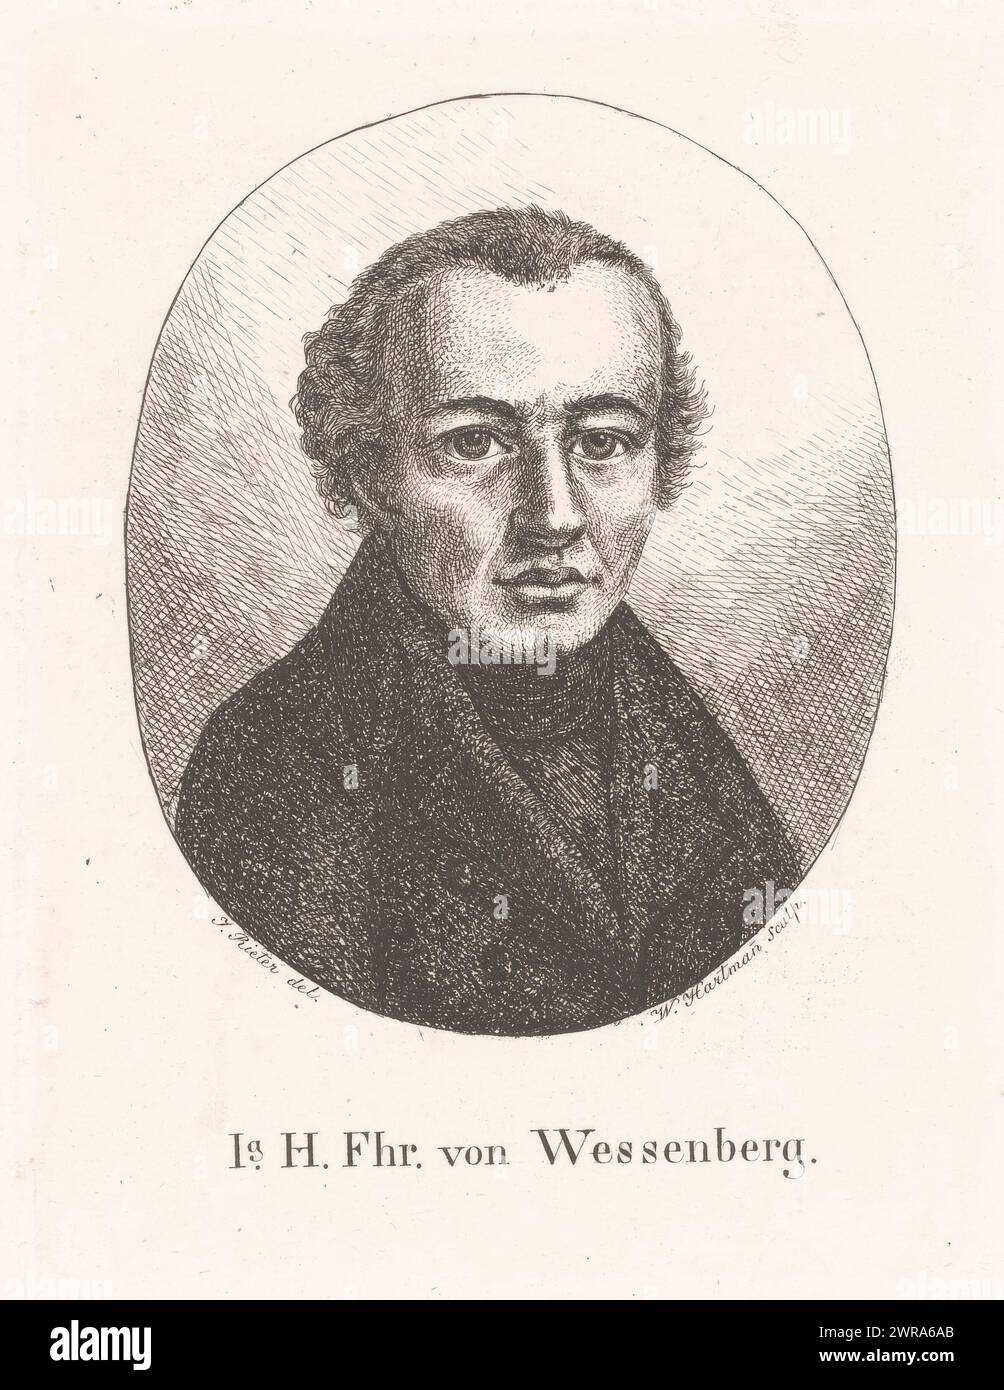 Portrait of Ignaz Heinrich von Wessenberg, print maker: Wilhelm Hartmann, after drawing by: Johann Jakob Rieter, 1803 - 1860, paper, etching, height 155 mm × width 117 mm, print Stock Photo